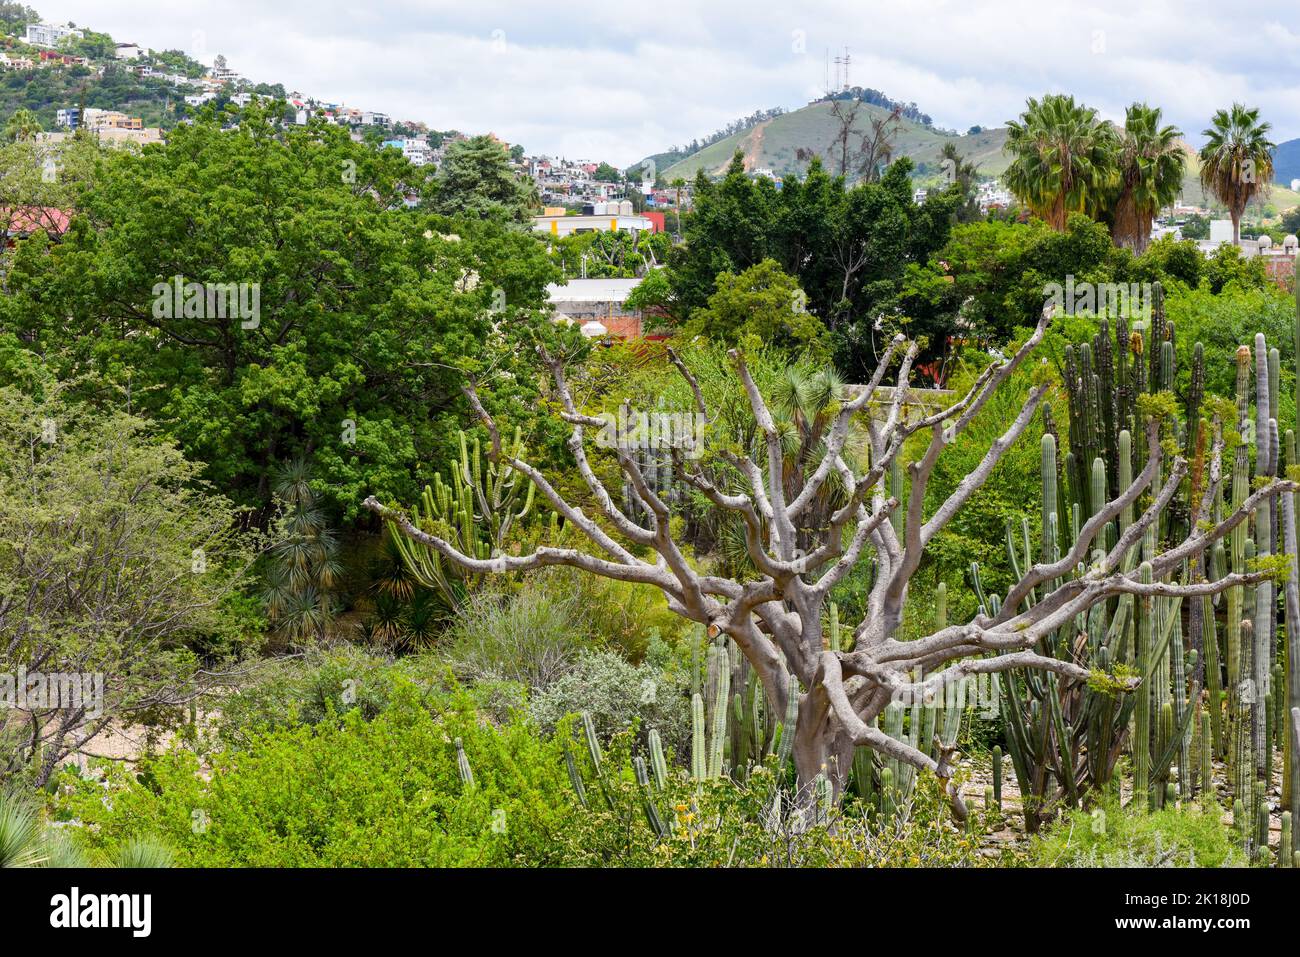 The Ethnobotanical Garden of Oaxaca (adjacent to the Church of Santo Domingo) features hundreds of plant species, all native to Oaxaca state.Oaxaca de Juarez, Mexico. Stock Photo